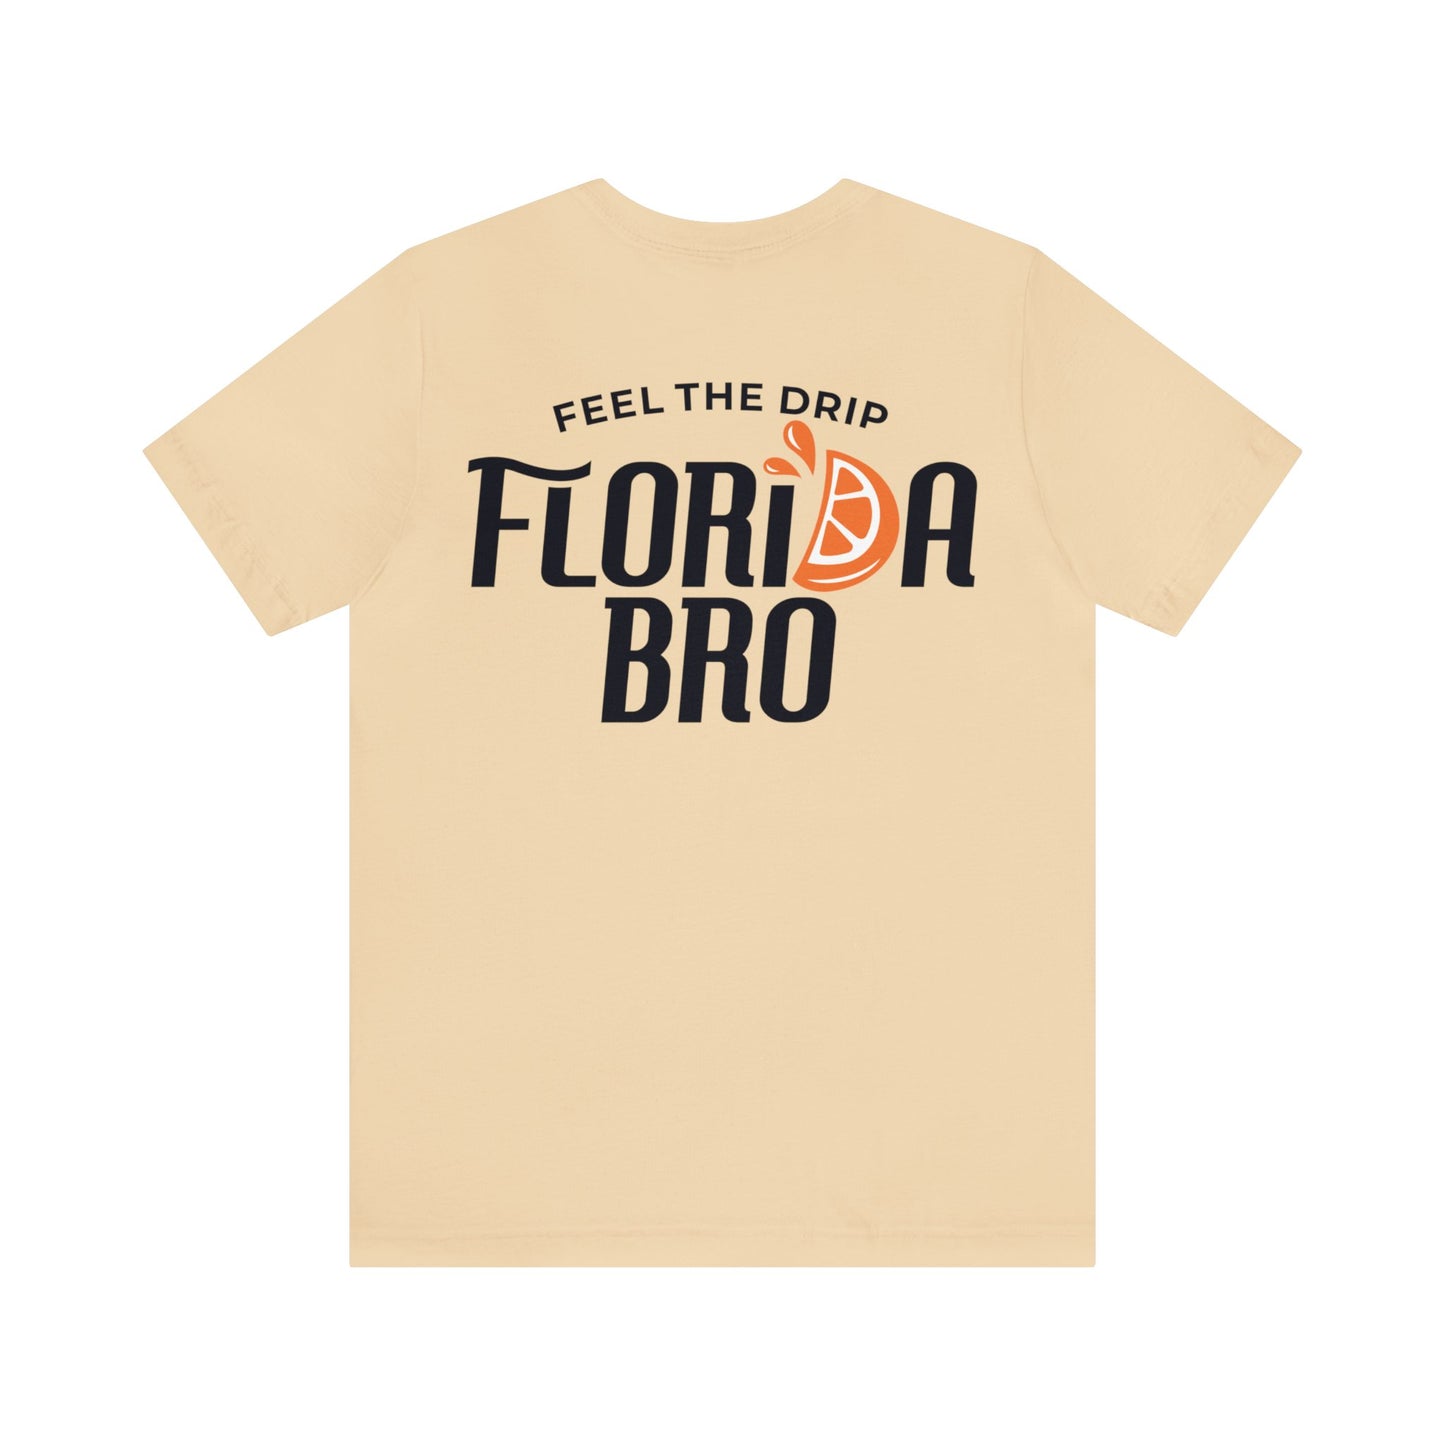 FLORIDA BRO - Short Sleeve Florida Beach Tee - Adult Sizes